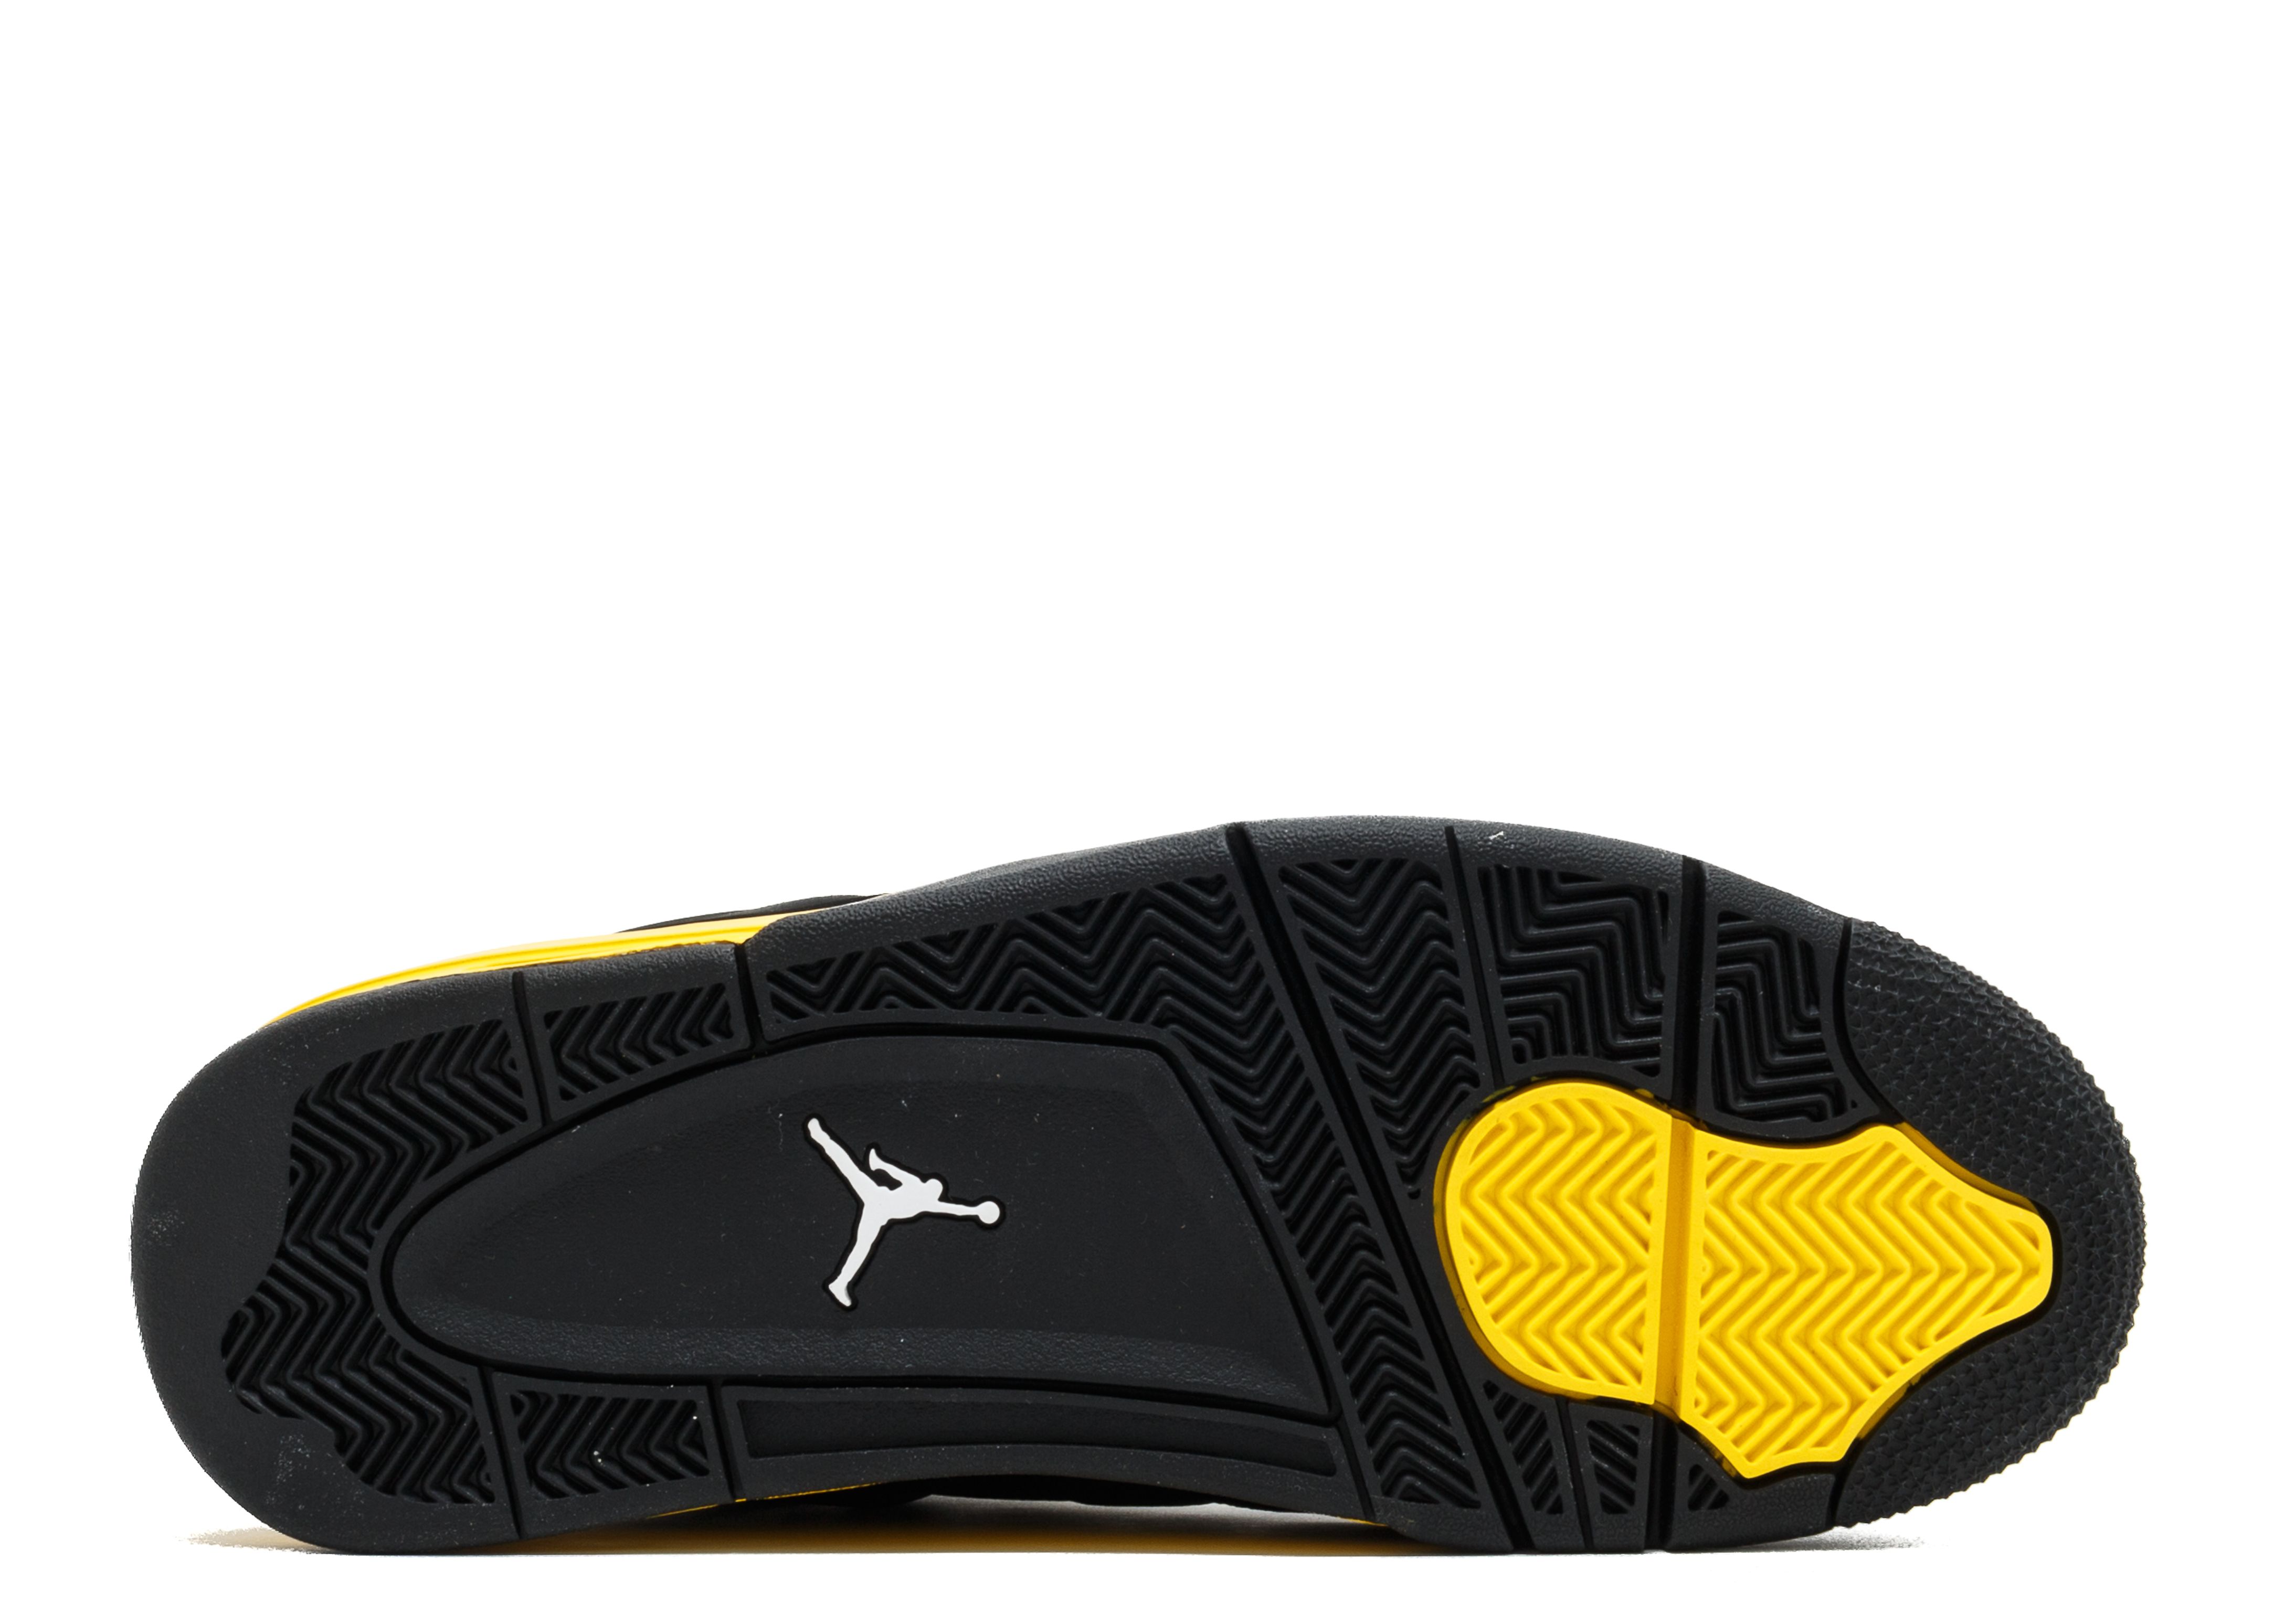 Jordan 4 Retro 'Thunder' 2012 - Air Jordan - 308497 008 - black/white-tour yellow | Flight Club